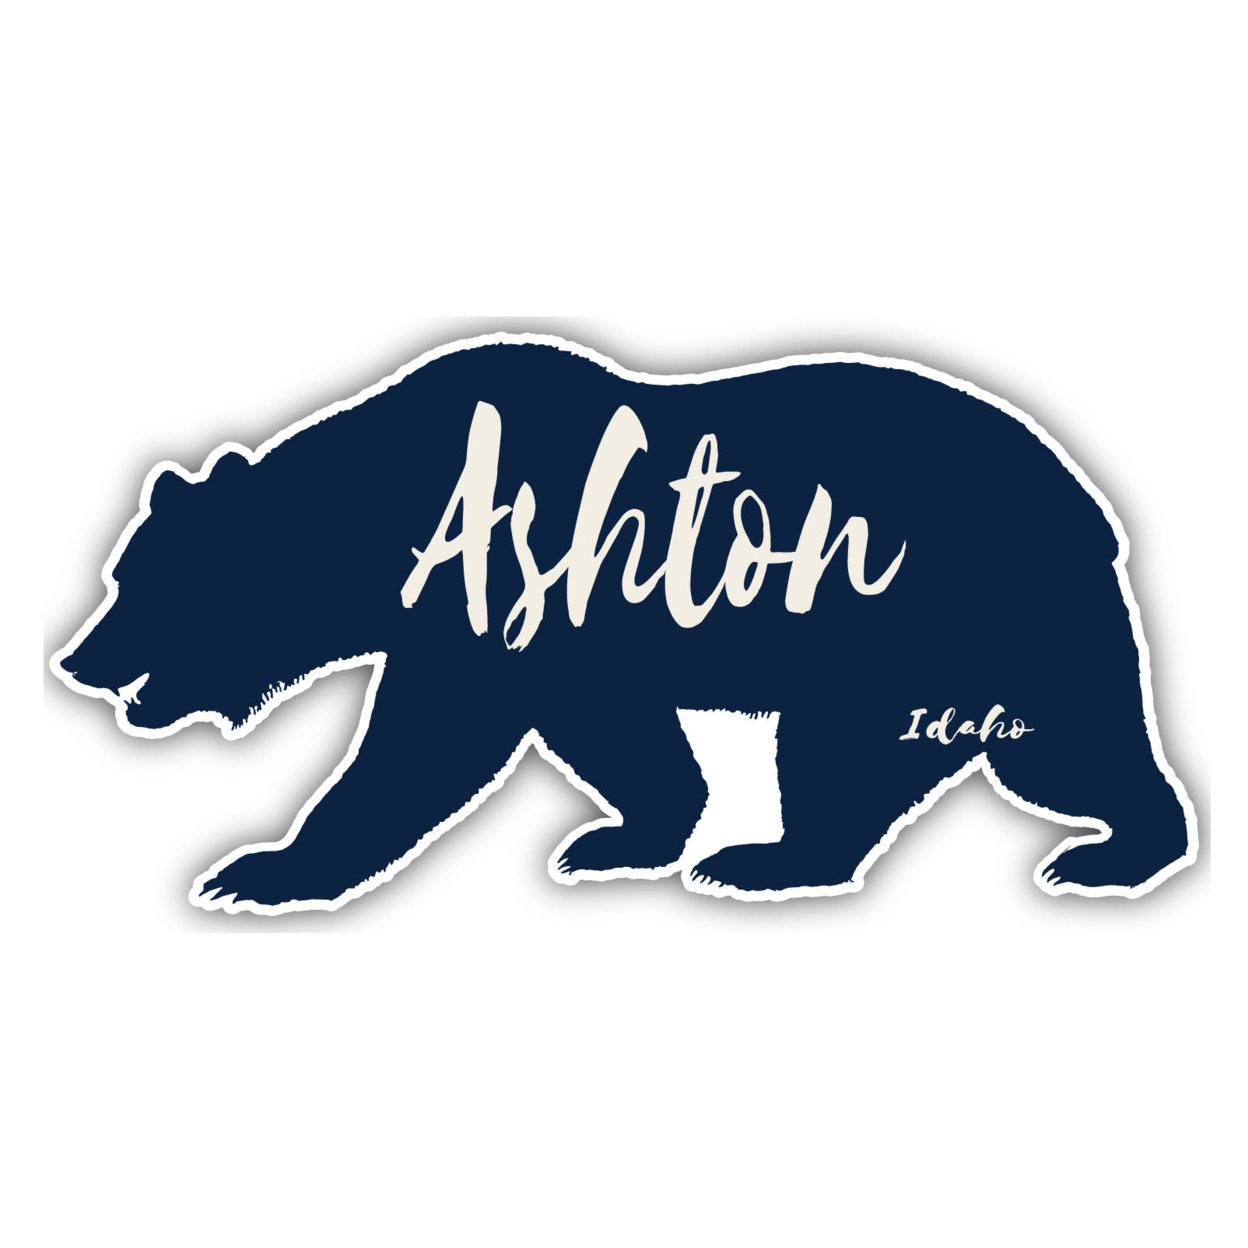 Ashton Idaho Souvenir Decorative Stickers (Choose Theme And Size) - Single Unit, 4-Inch, Adventures Awaits